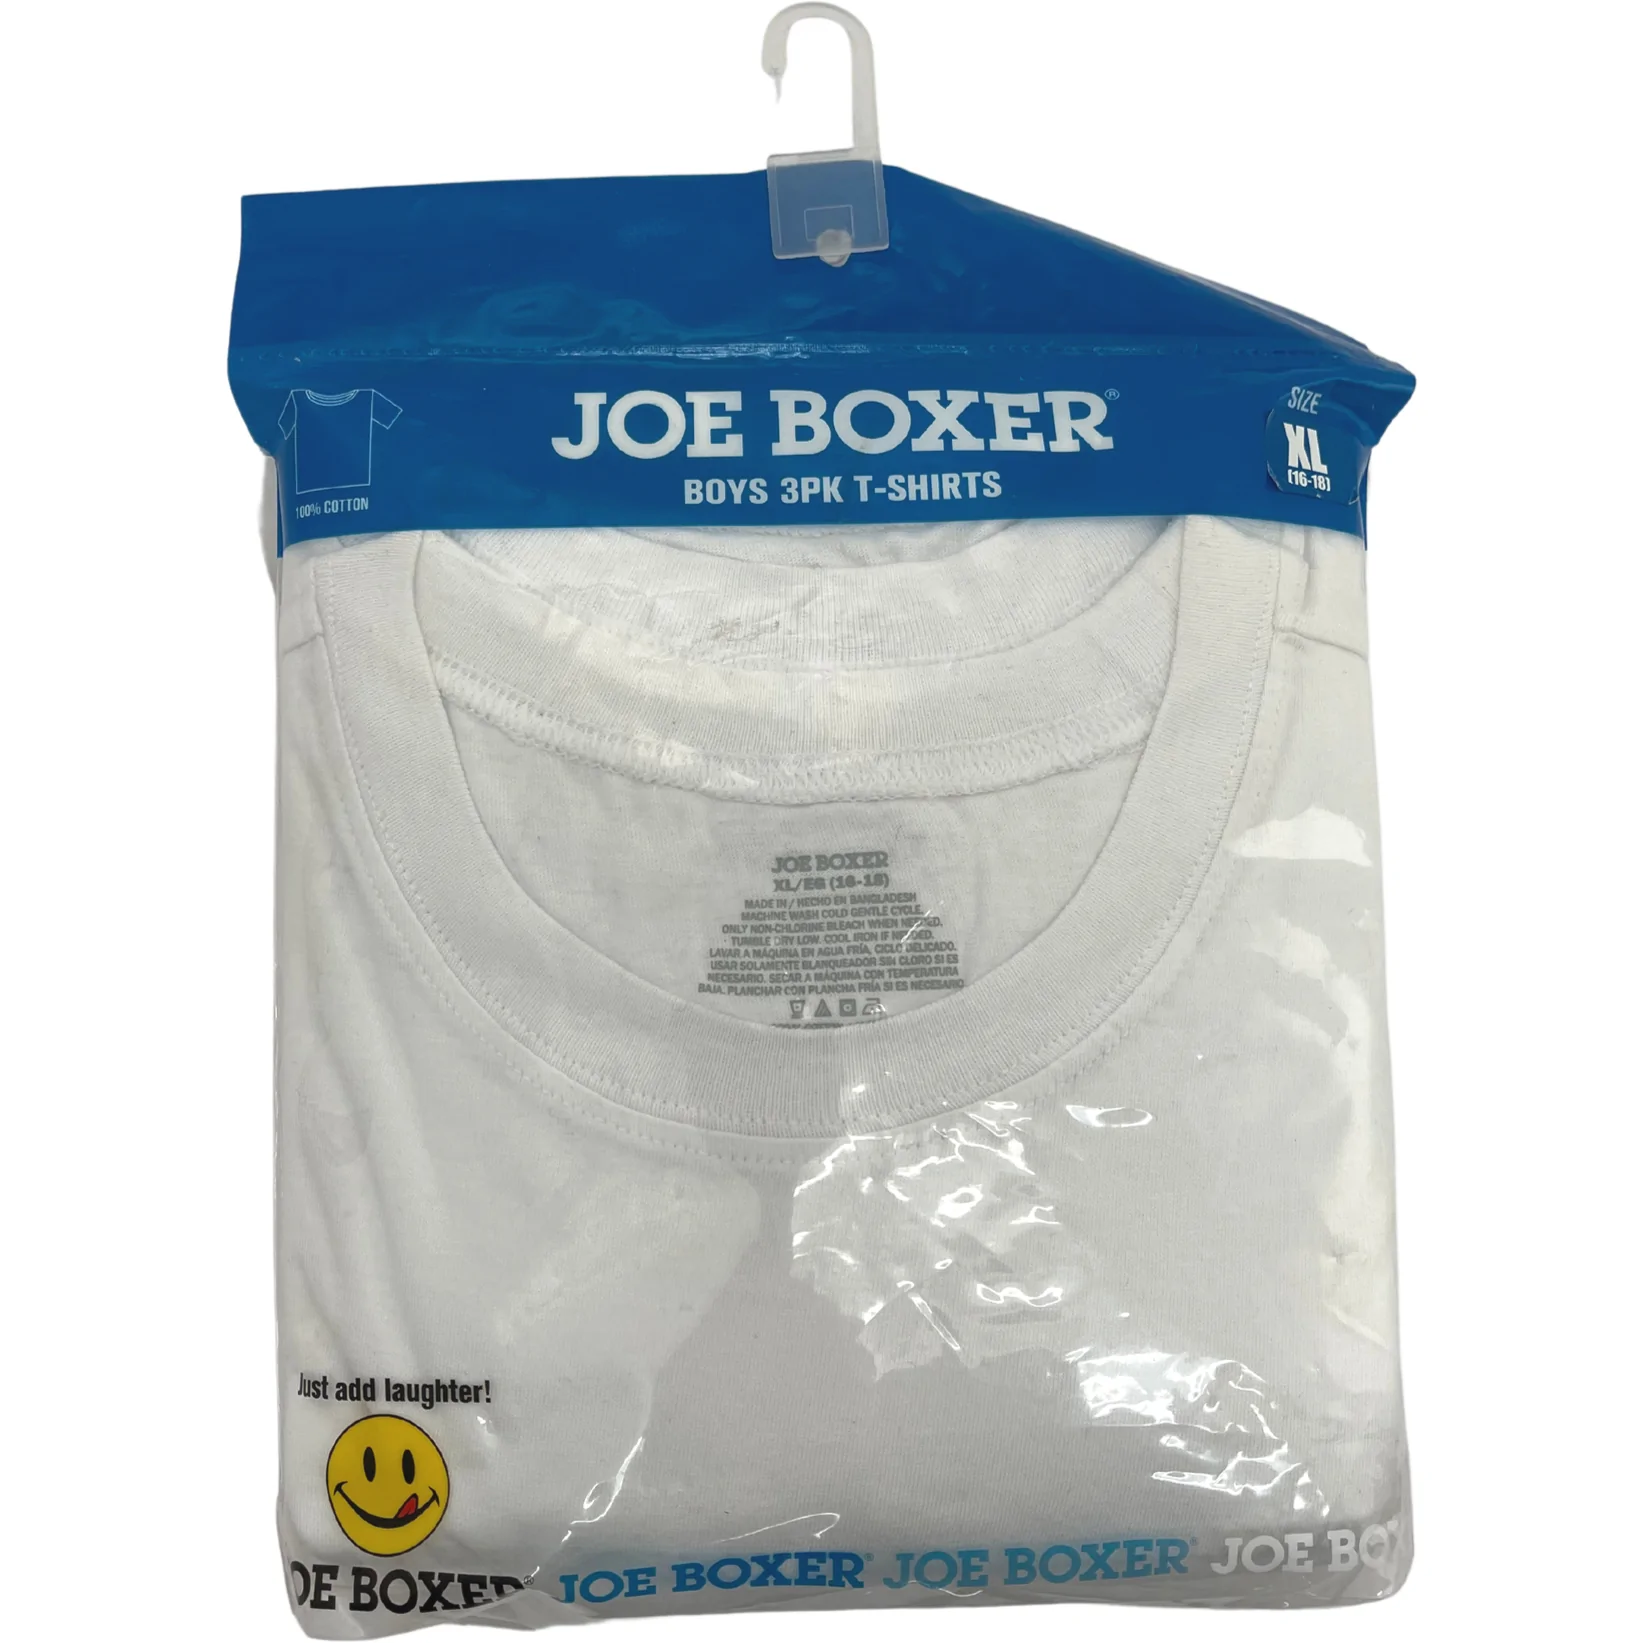 Joe Boxer Boy's Under Shirt / 3 Pack / White / Crewneck Shirts / Cotton T-Shirts / Size XLarge **No Tags**